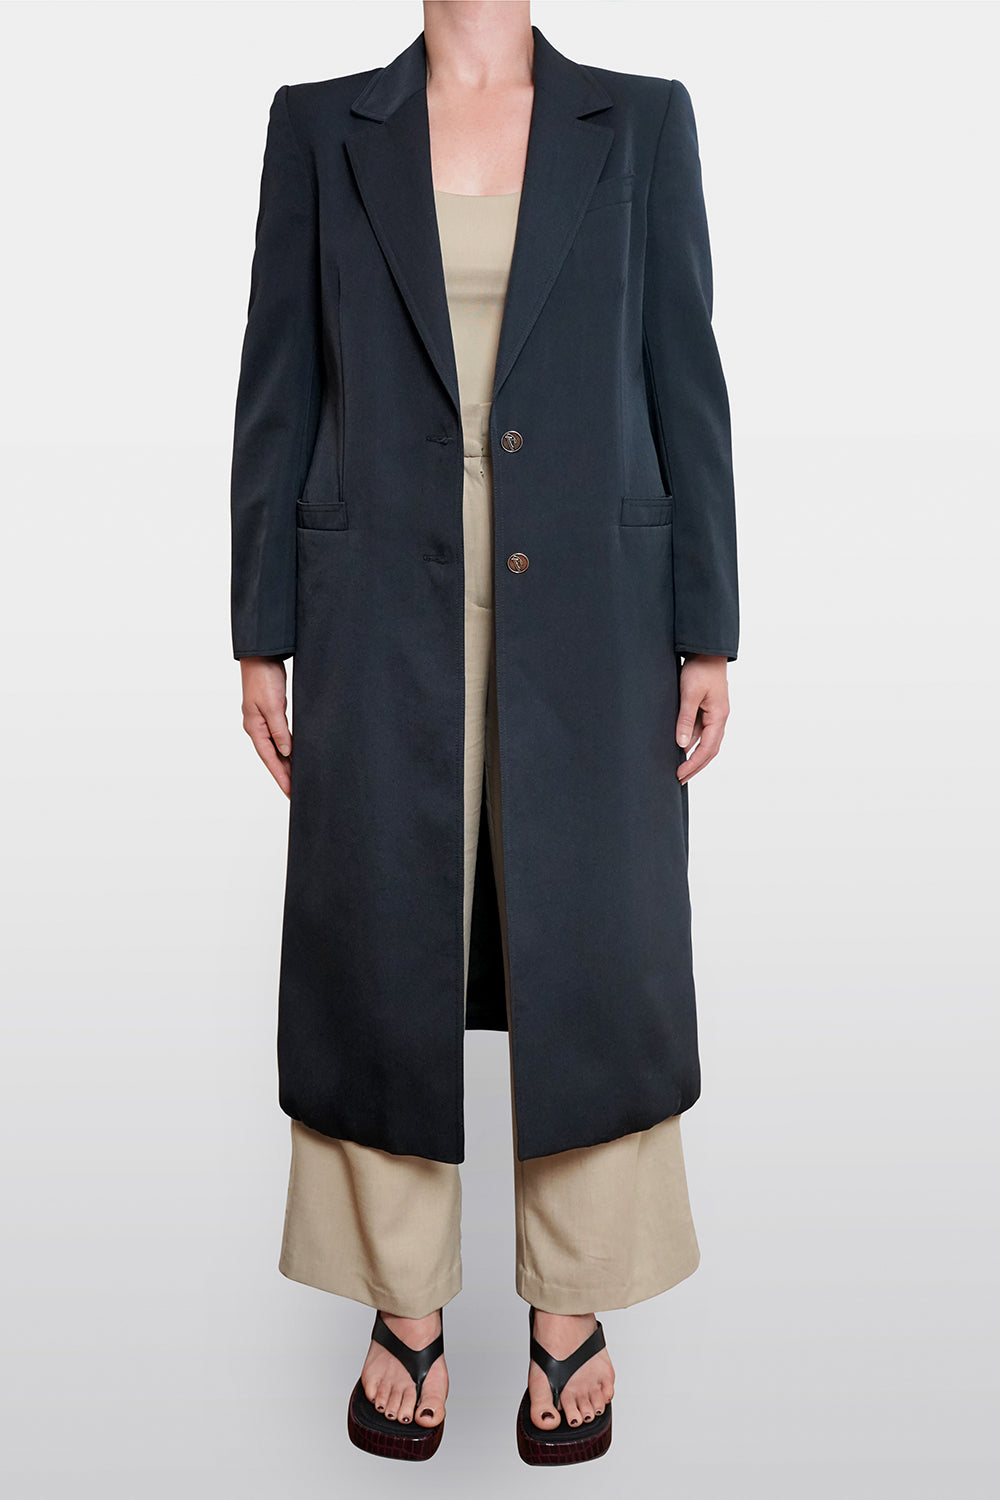 Louis Feraud Vintage Blazer Coat Size 8-12